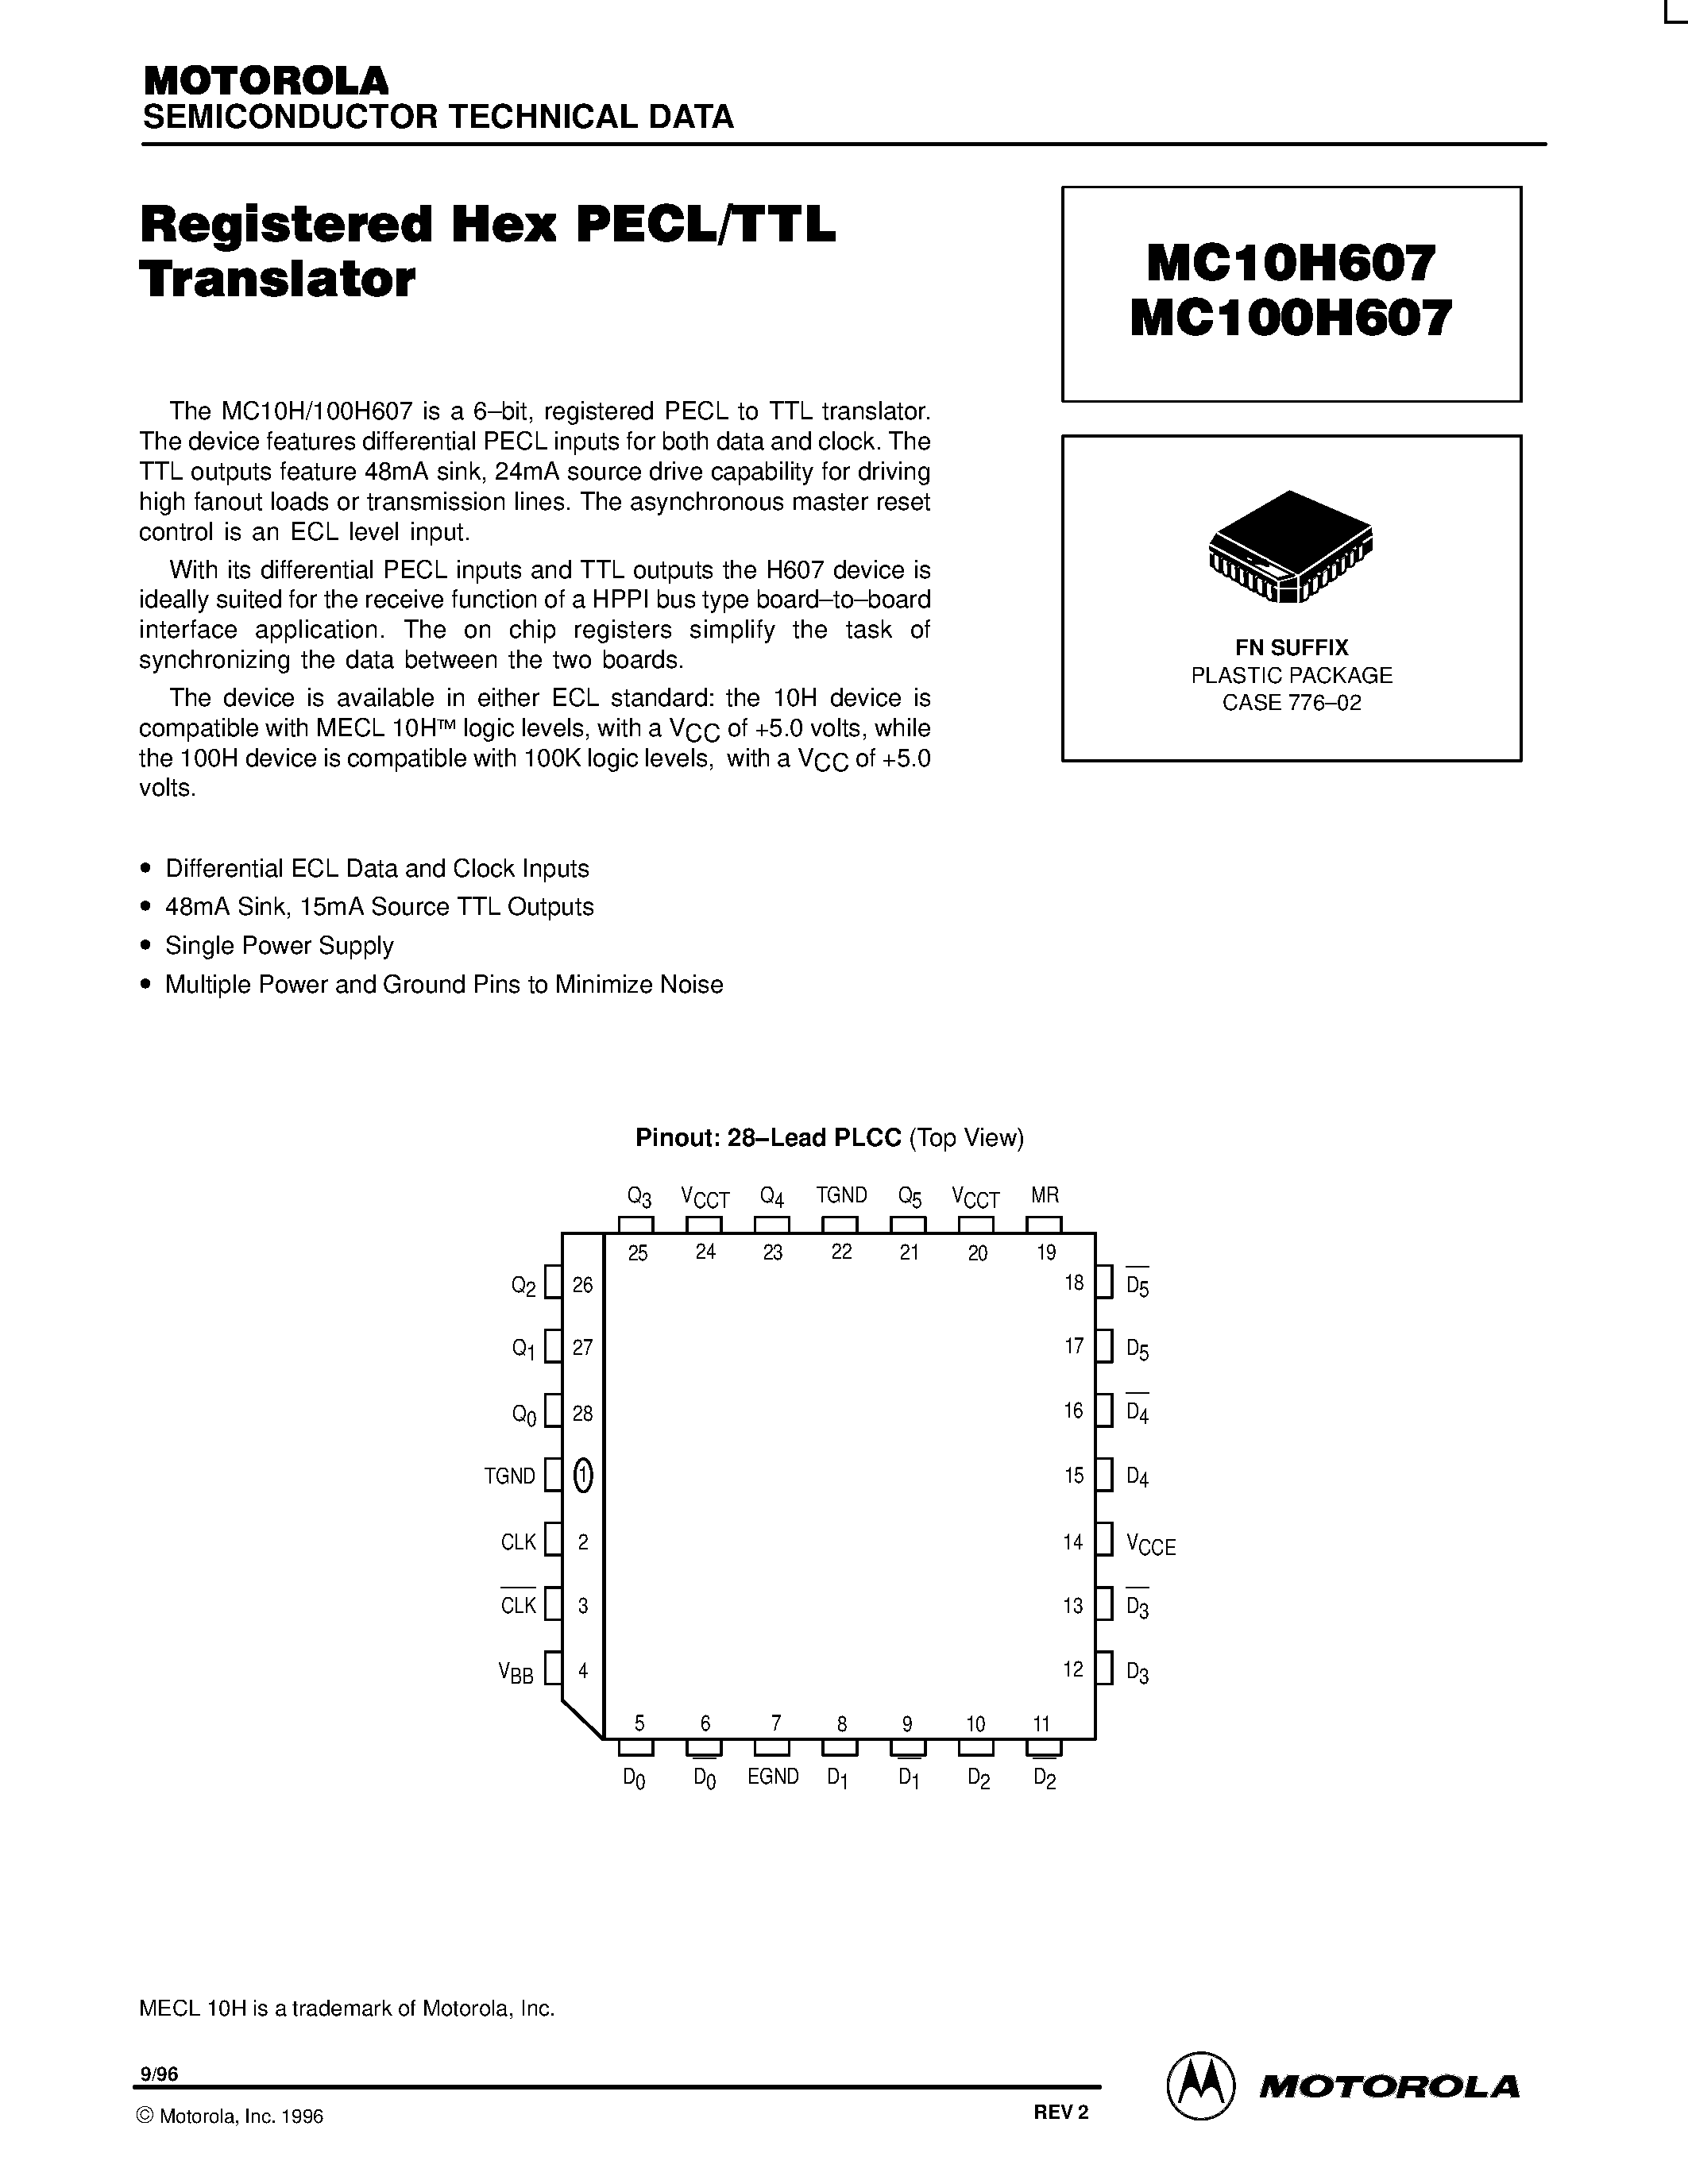 Datasheet MC10H607FN - Registered Hex PECL/TTL Translator page 1